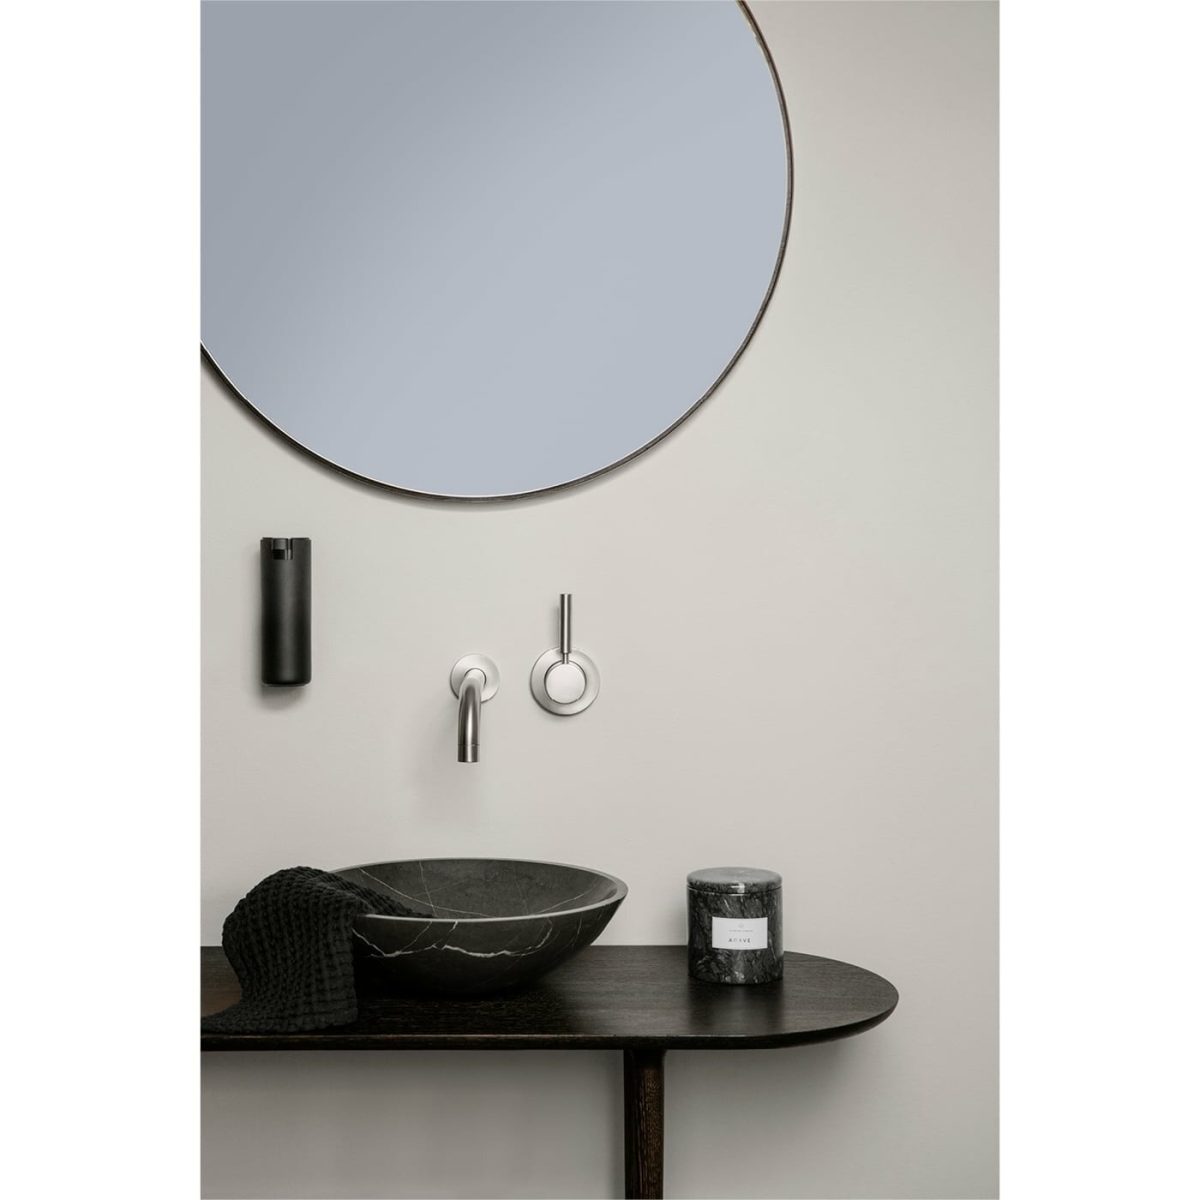 BLOMUS Диспенсър за сапун MODO за стенен монтаж - цвят черен